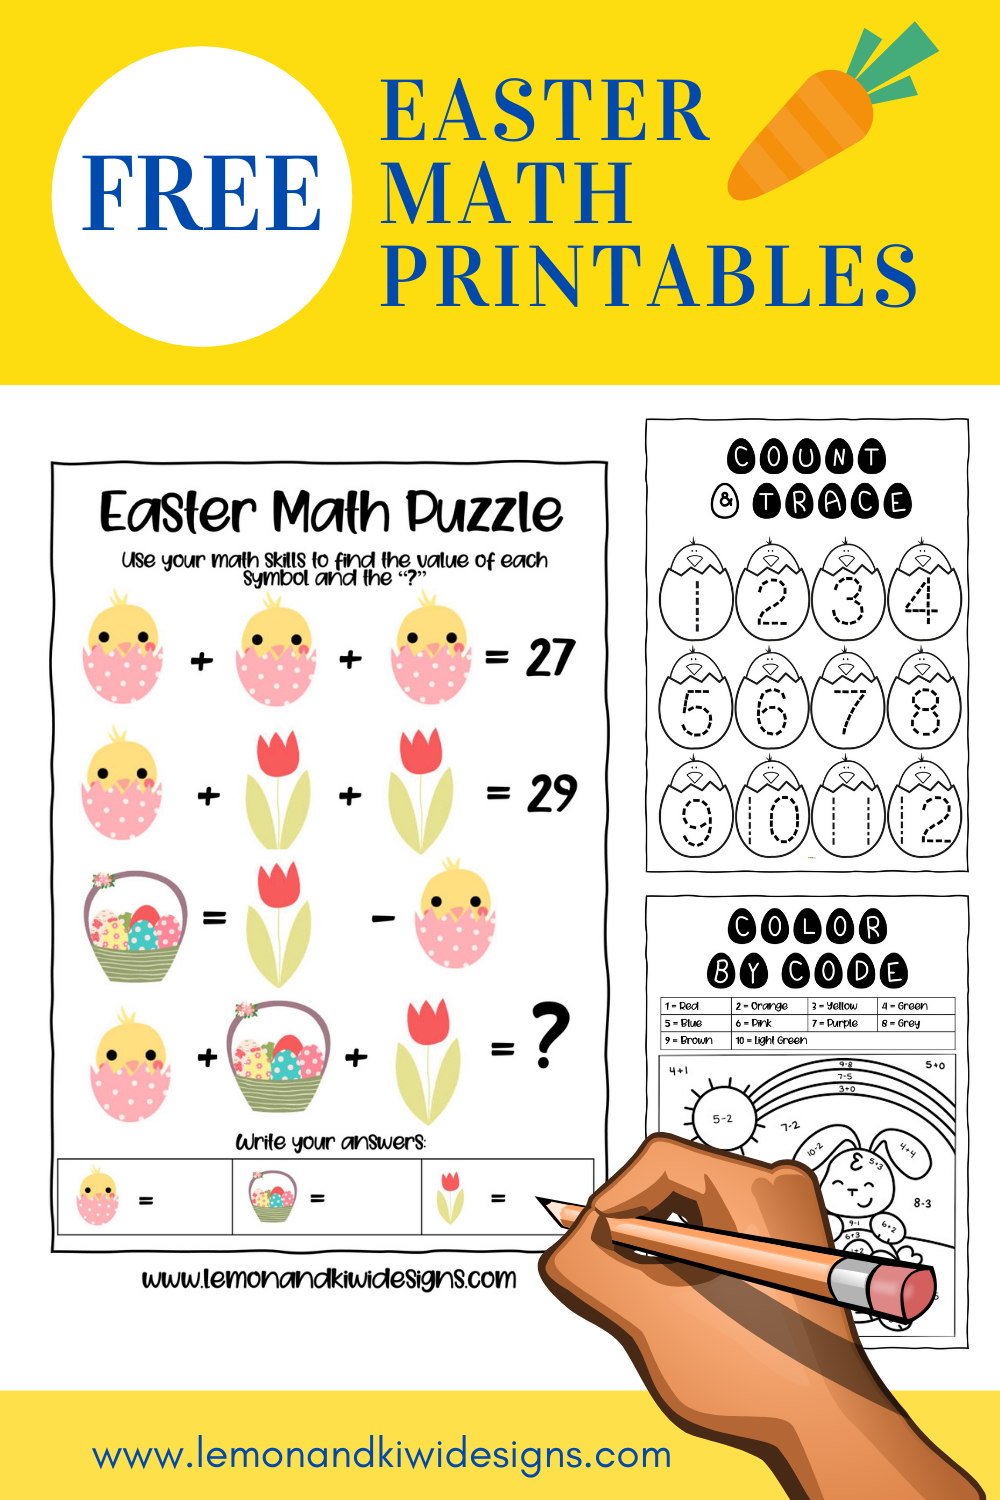 Free Easter Math Printables